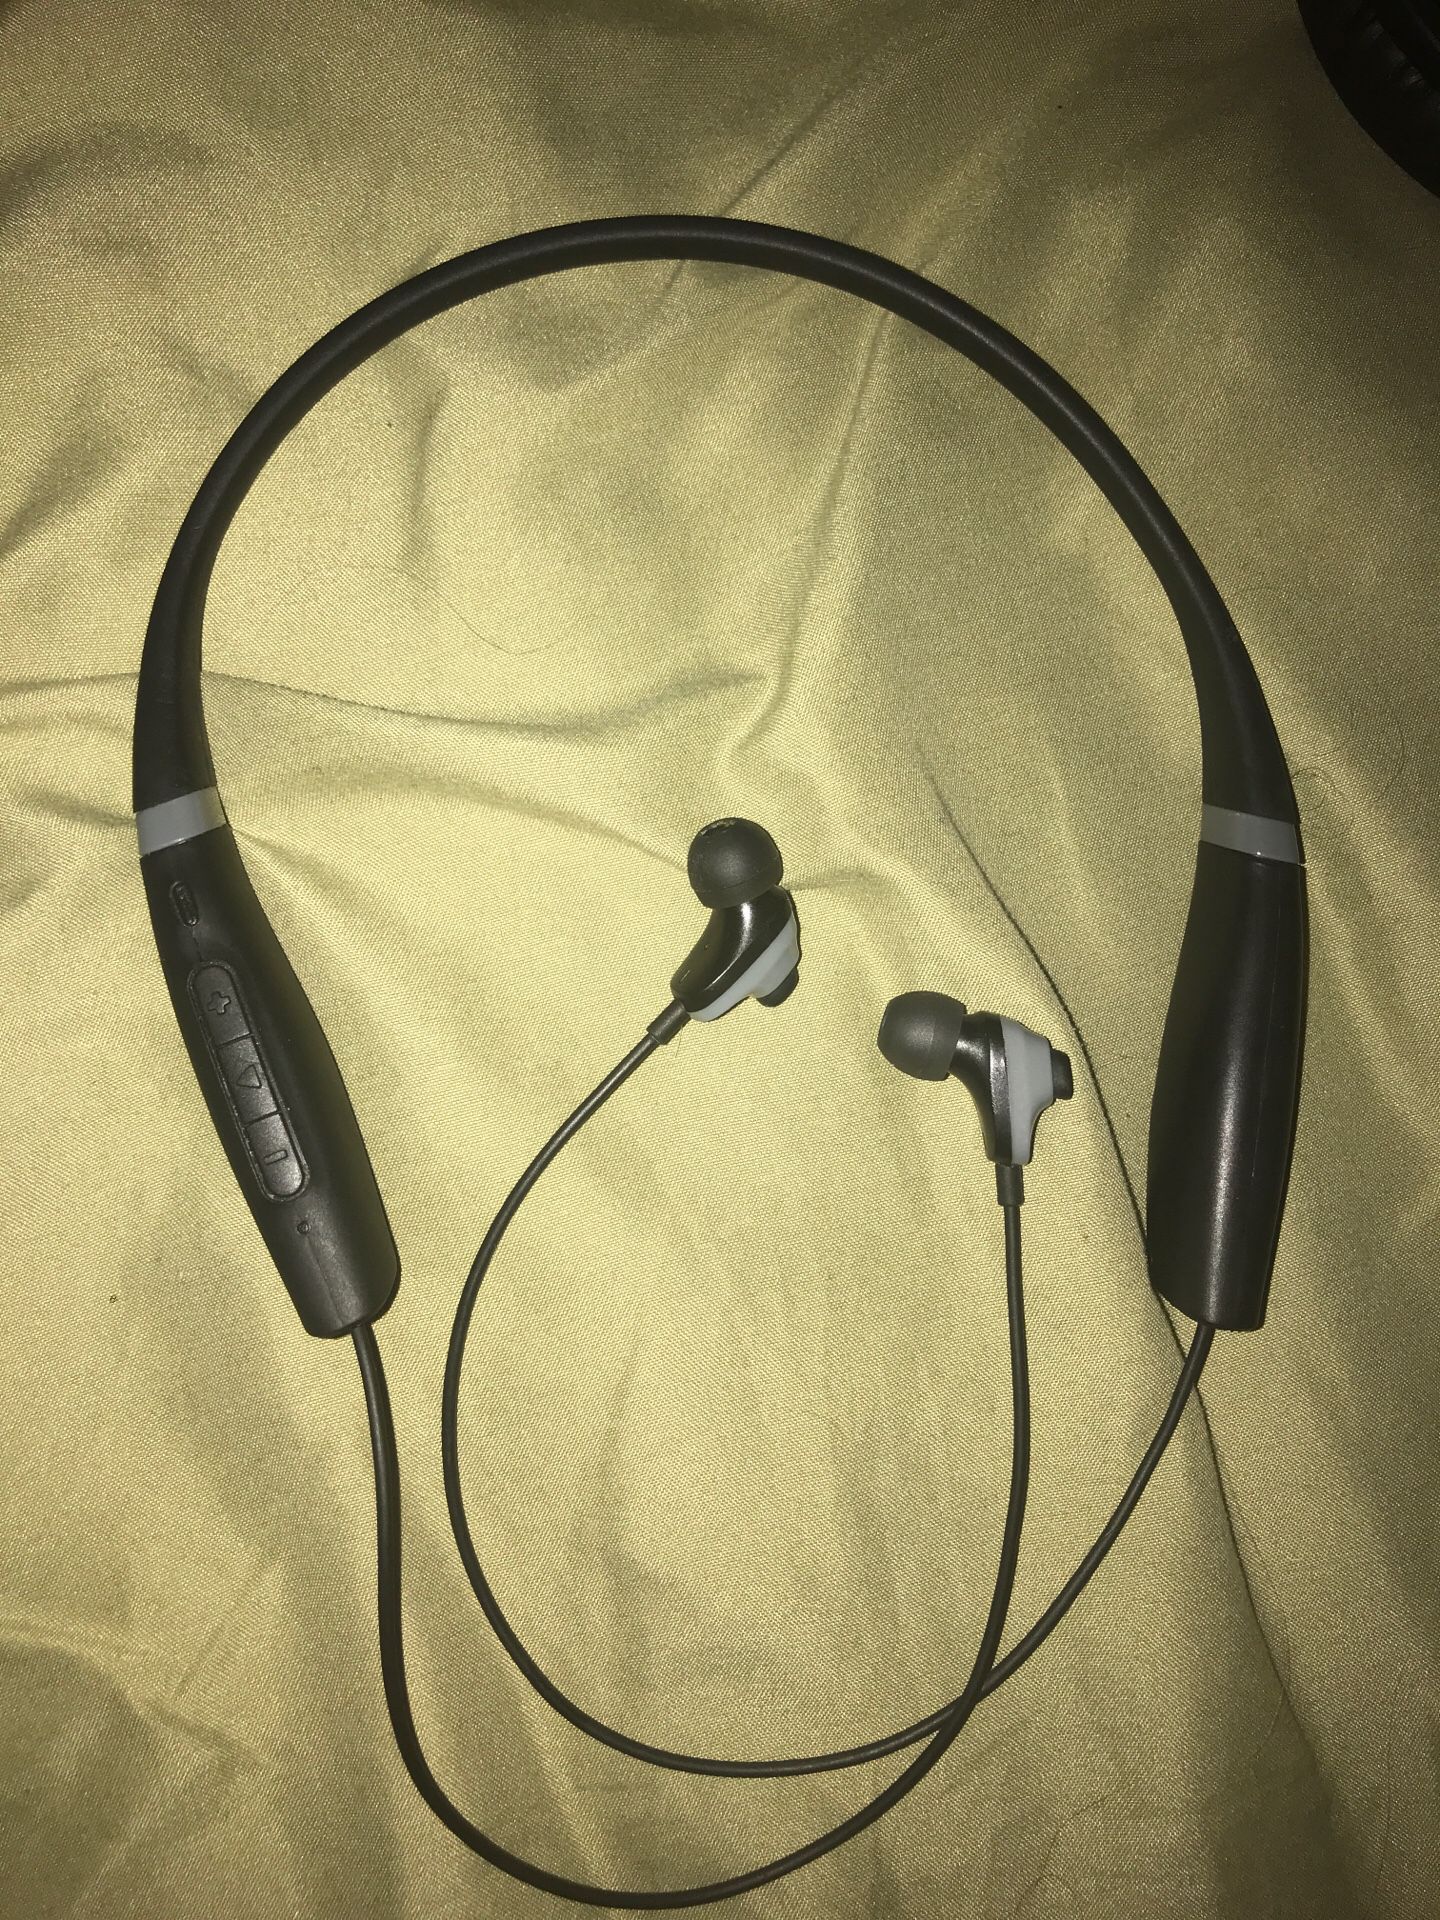 Jam Bluetooth earbuds